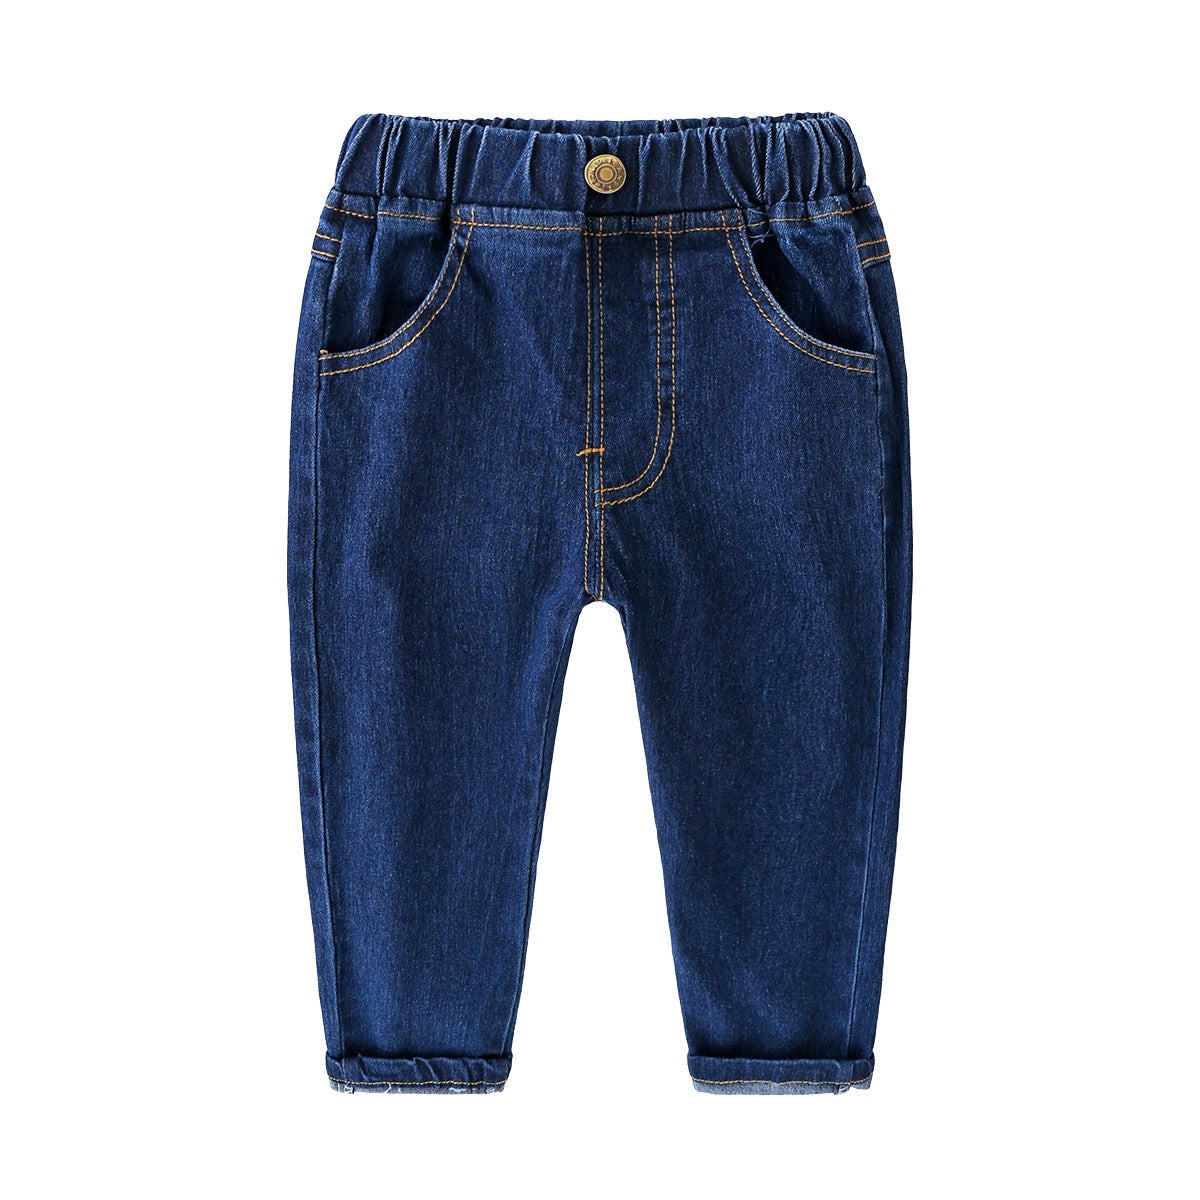 [513619] - Bawahan Celana Panjang Jeans Import Anak Cowok - Motif Casual Line